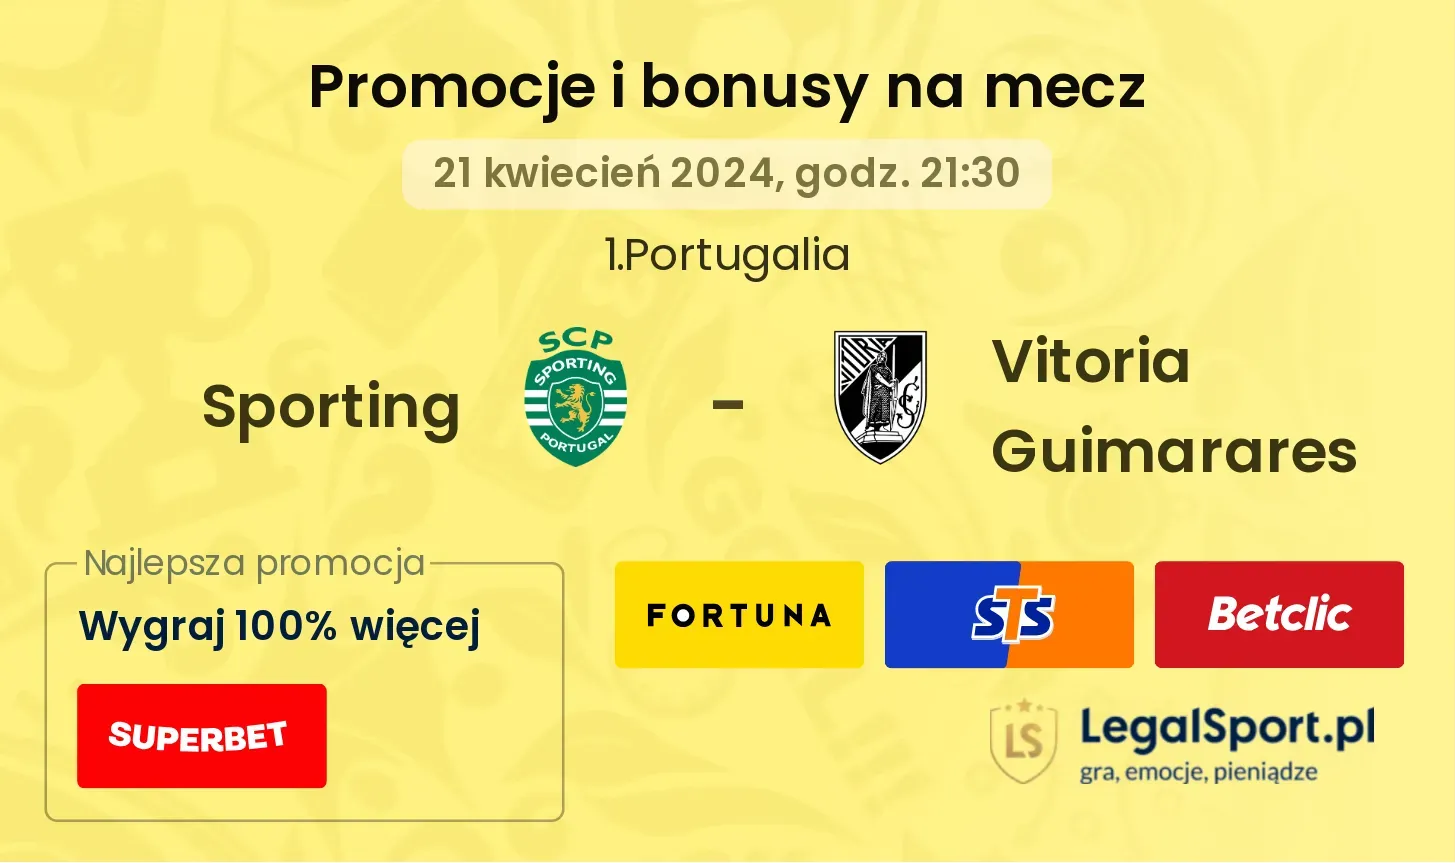 Sporting - Vitoria Guimarares promocje bonusy na mecz